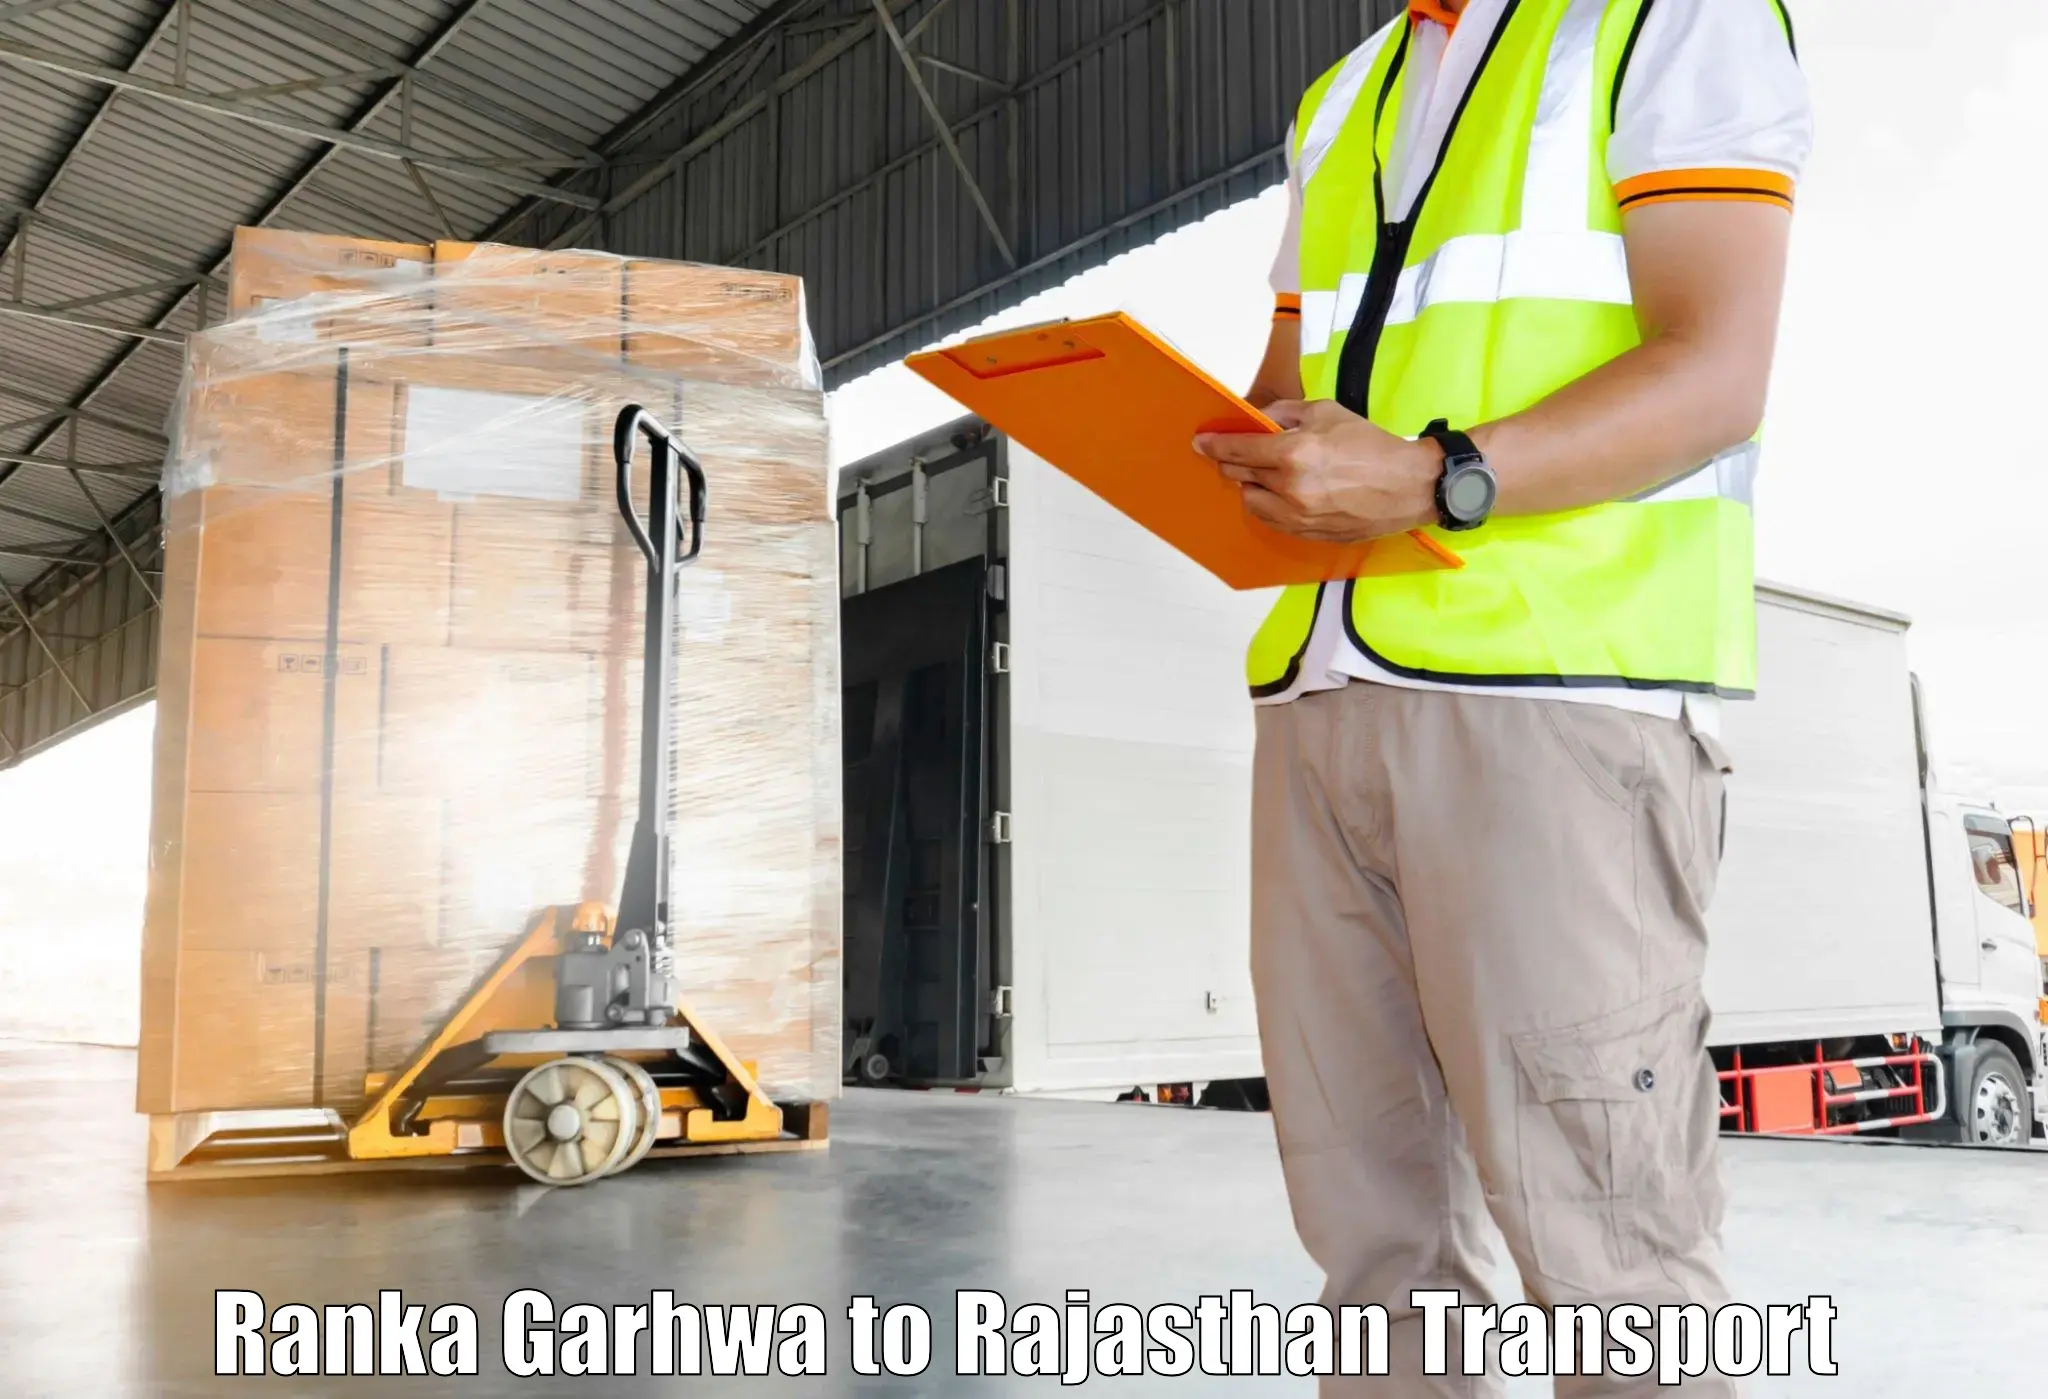 Shipping partner Ranka Garhwa to Udaipur